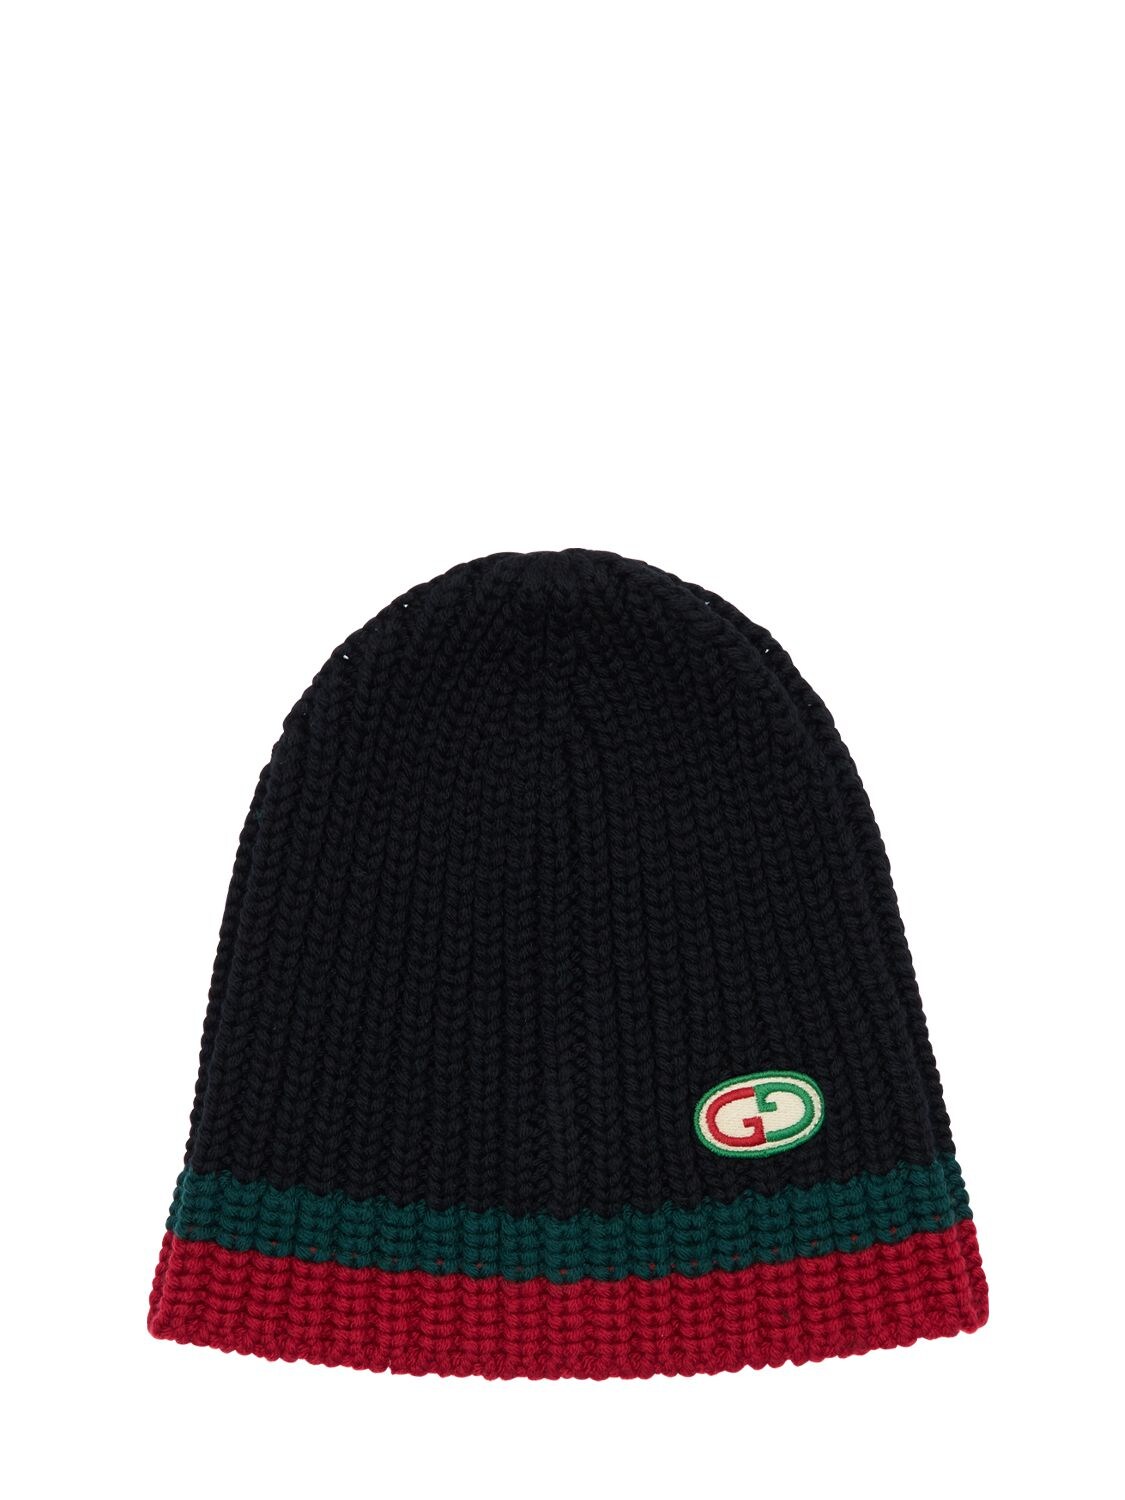 Gucci Babies' Knit Wool Hat W/ Web In Black